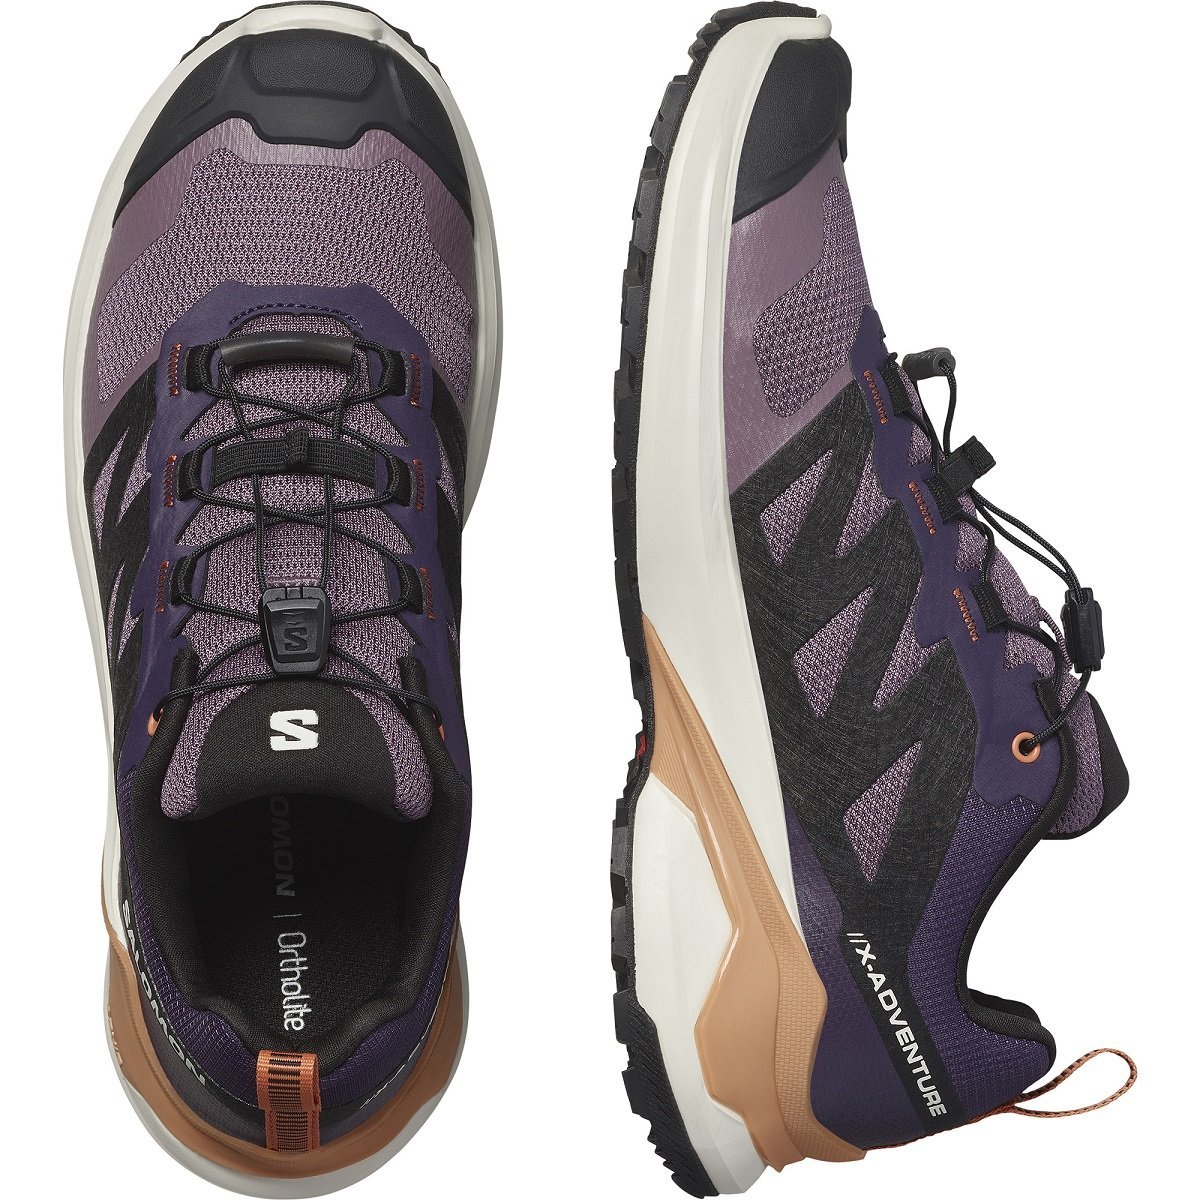 Topánky Salomon X-Adventure W - purple